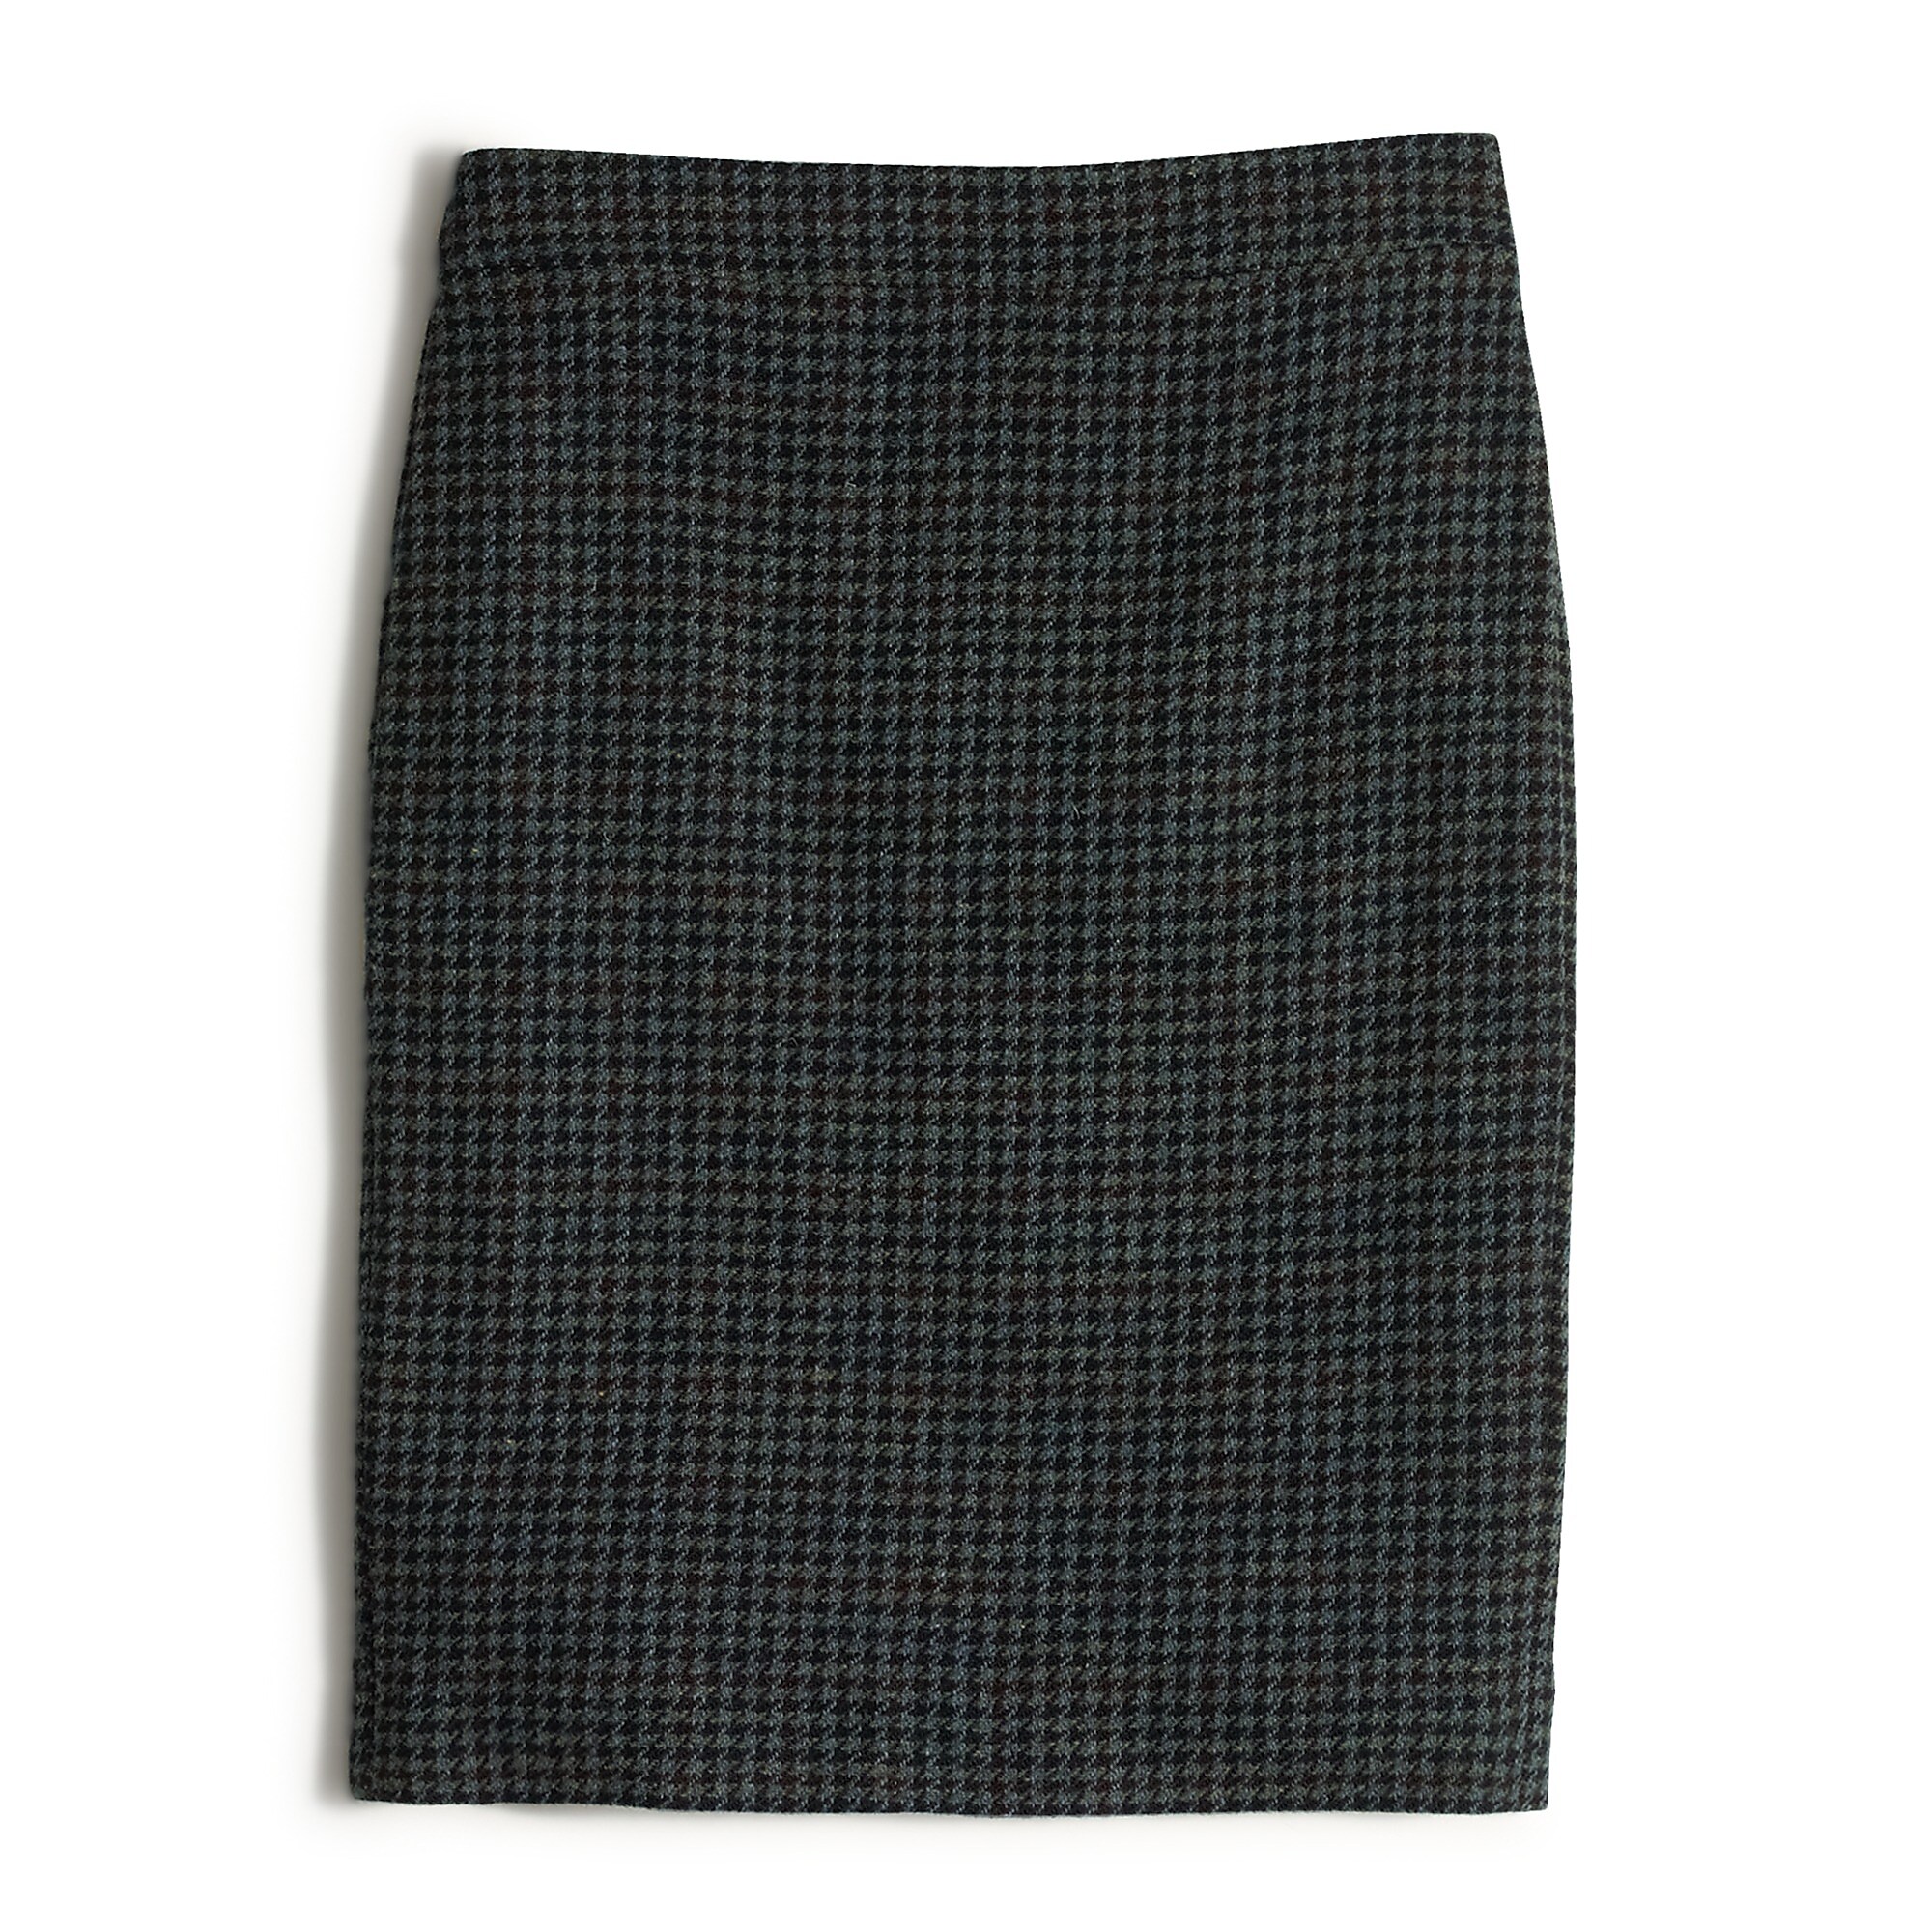 Pencil skirt in houndstooth : FactoryWomen pencil | Factory